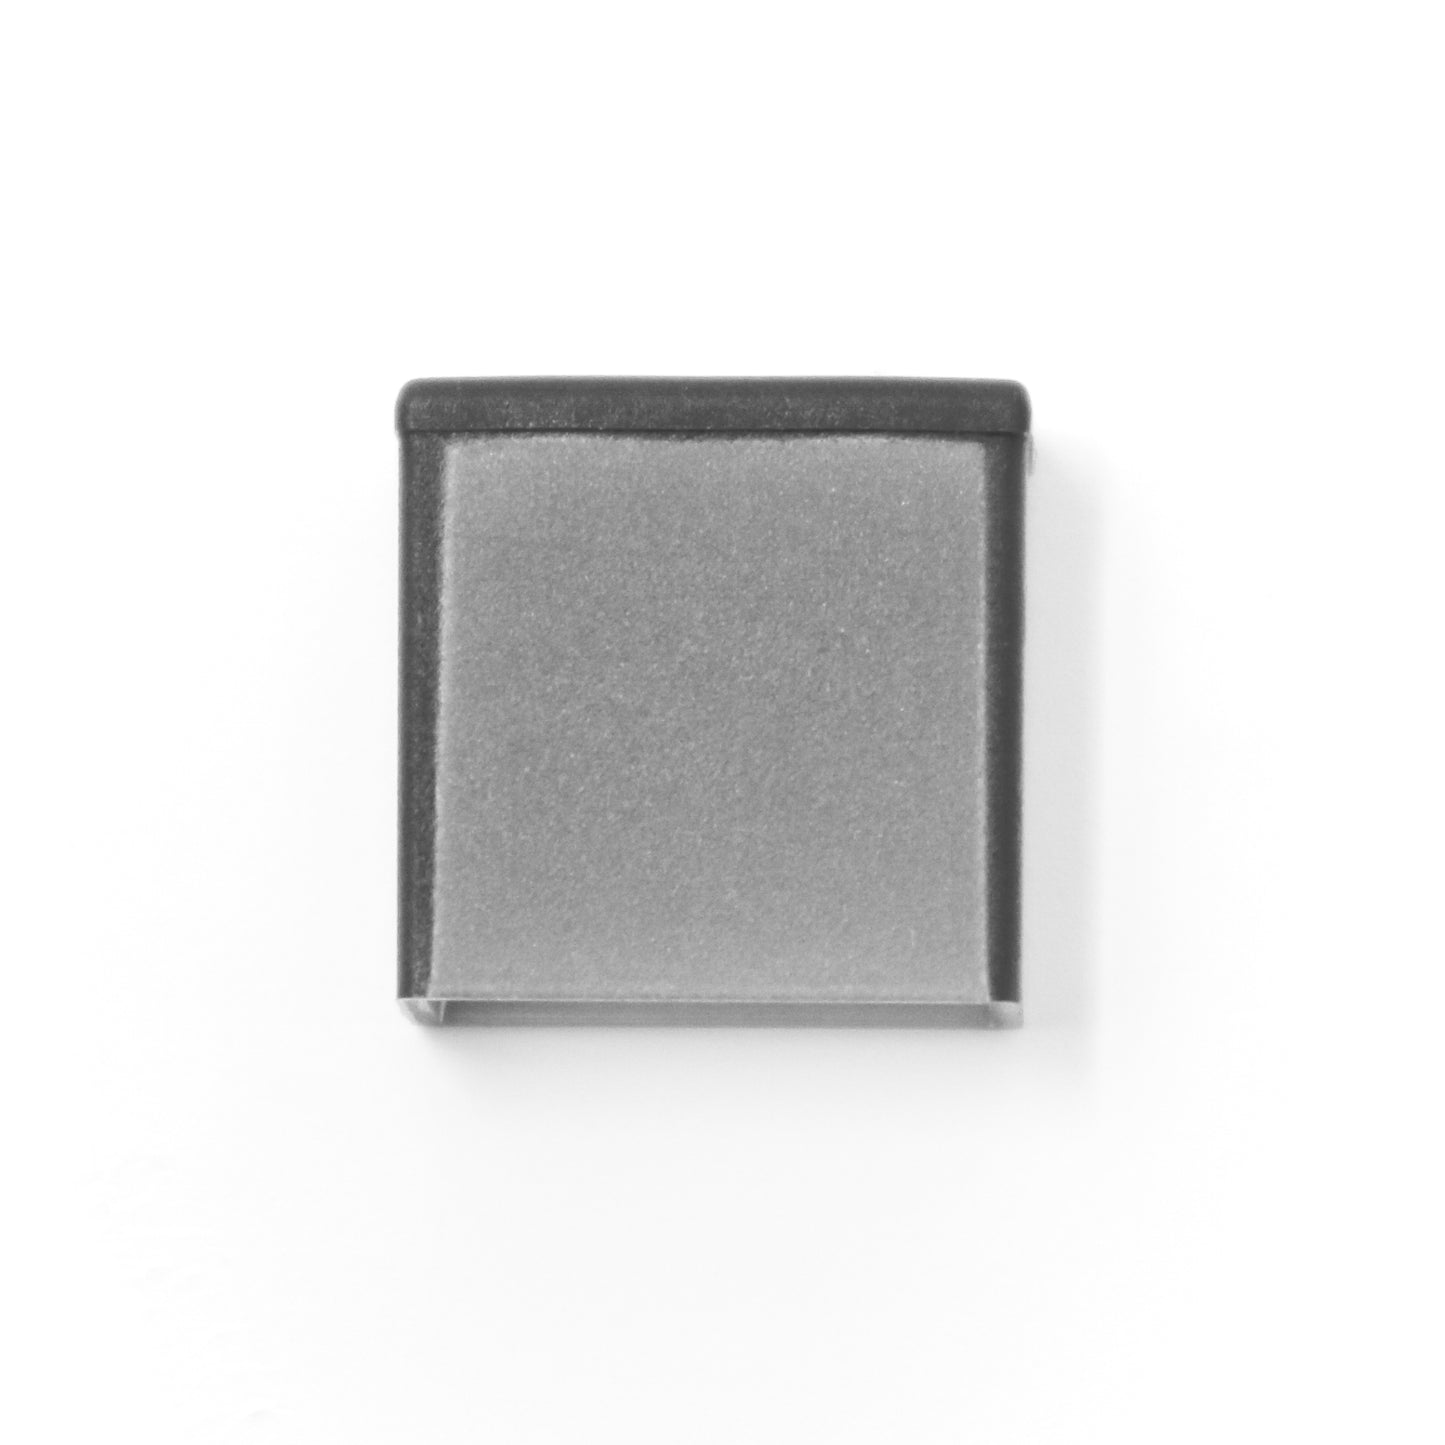 USB Male Dustproof Cap